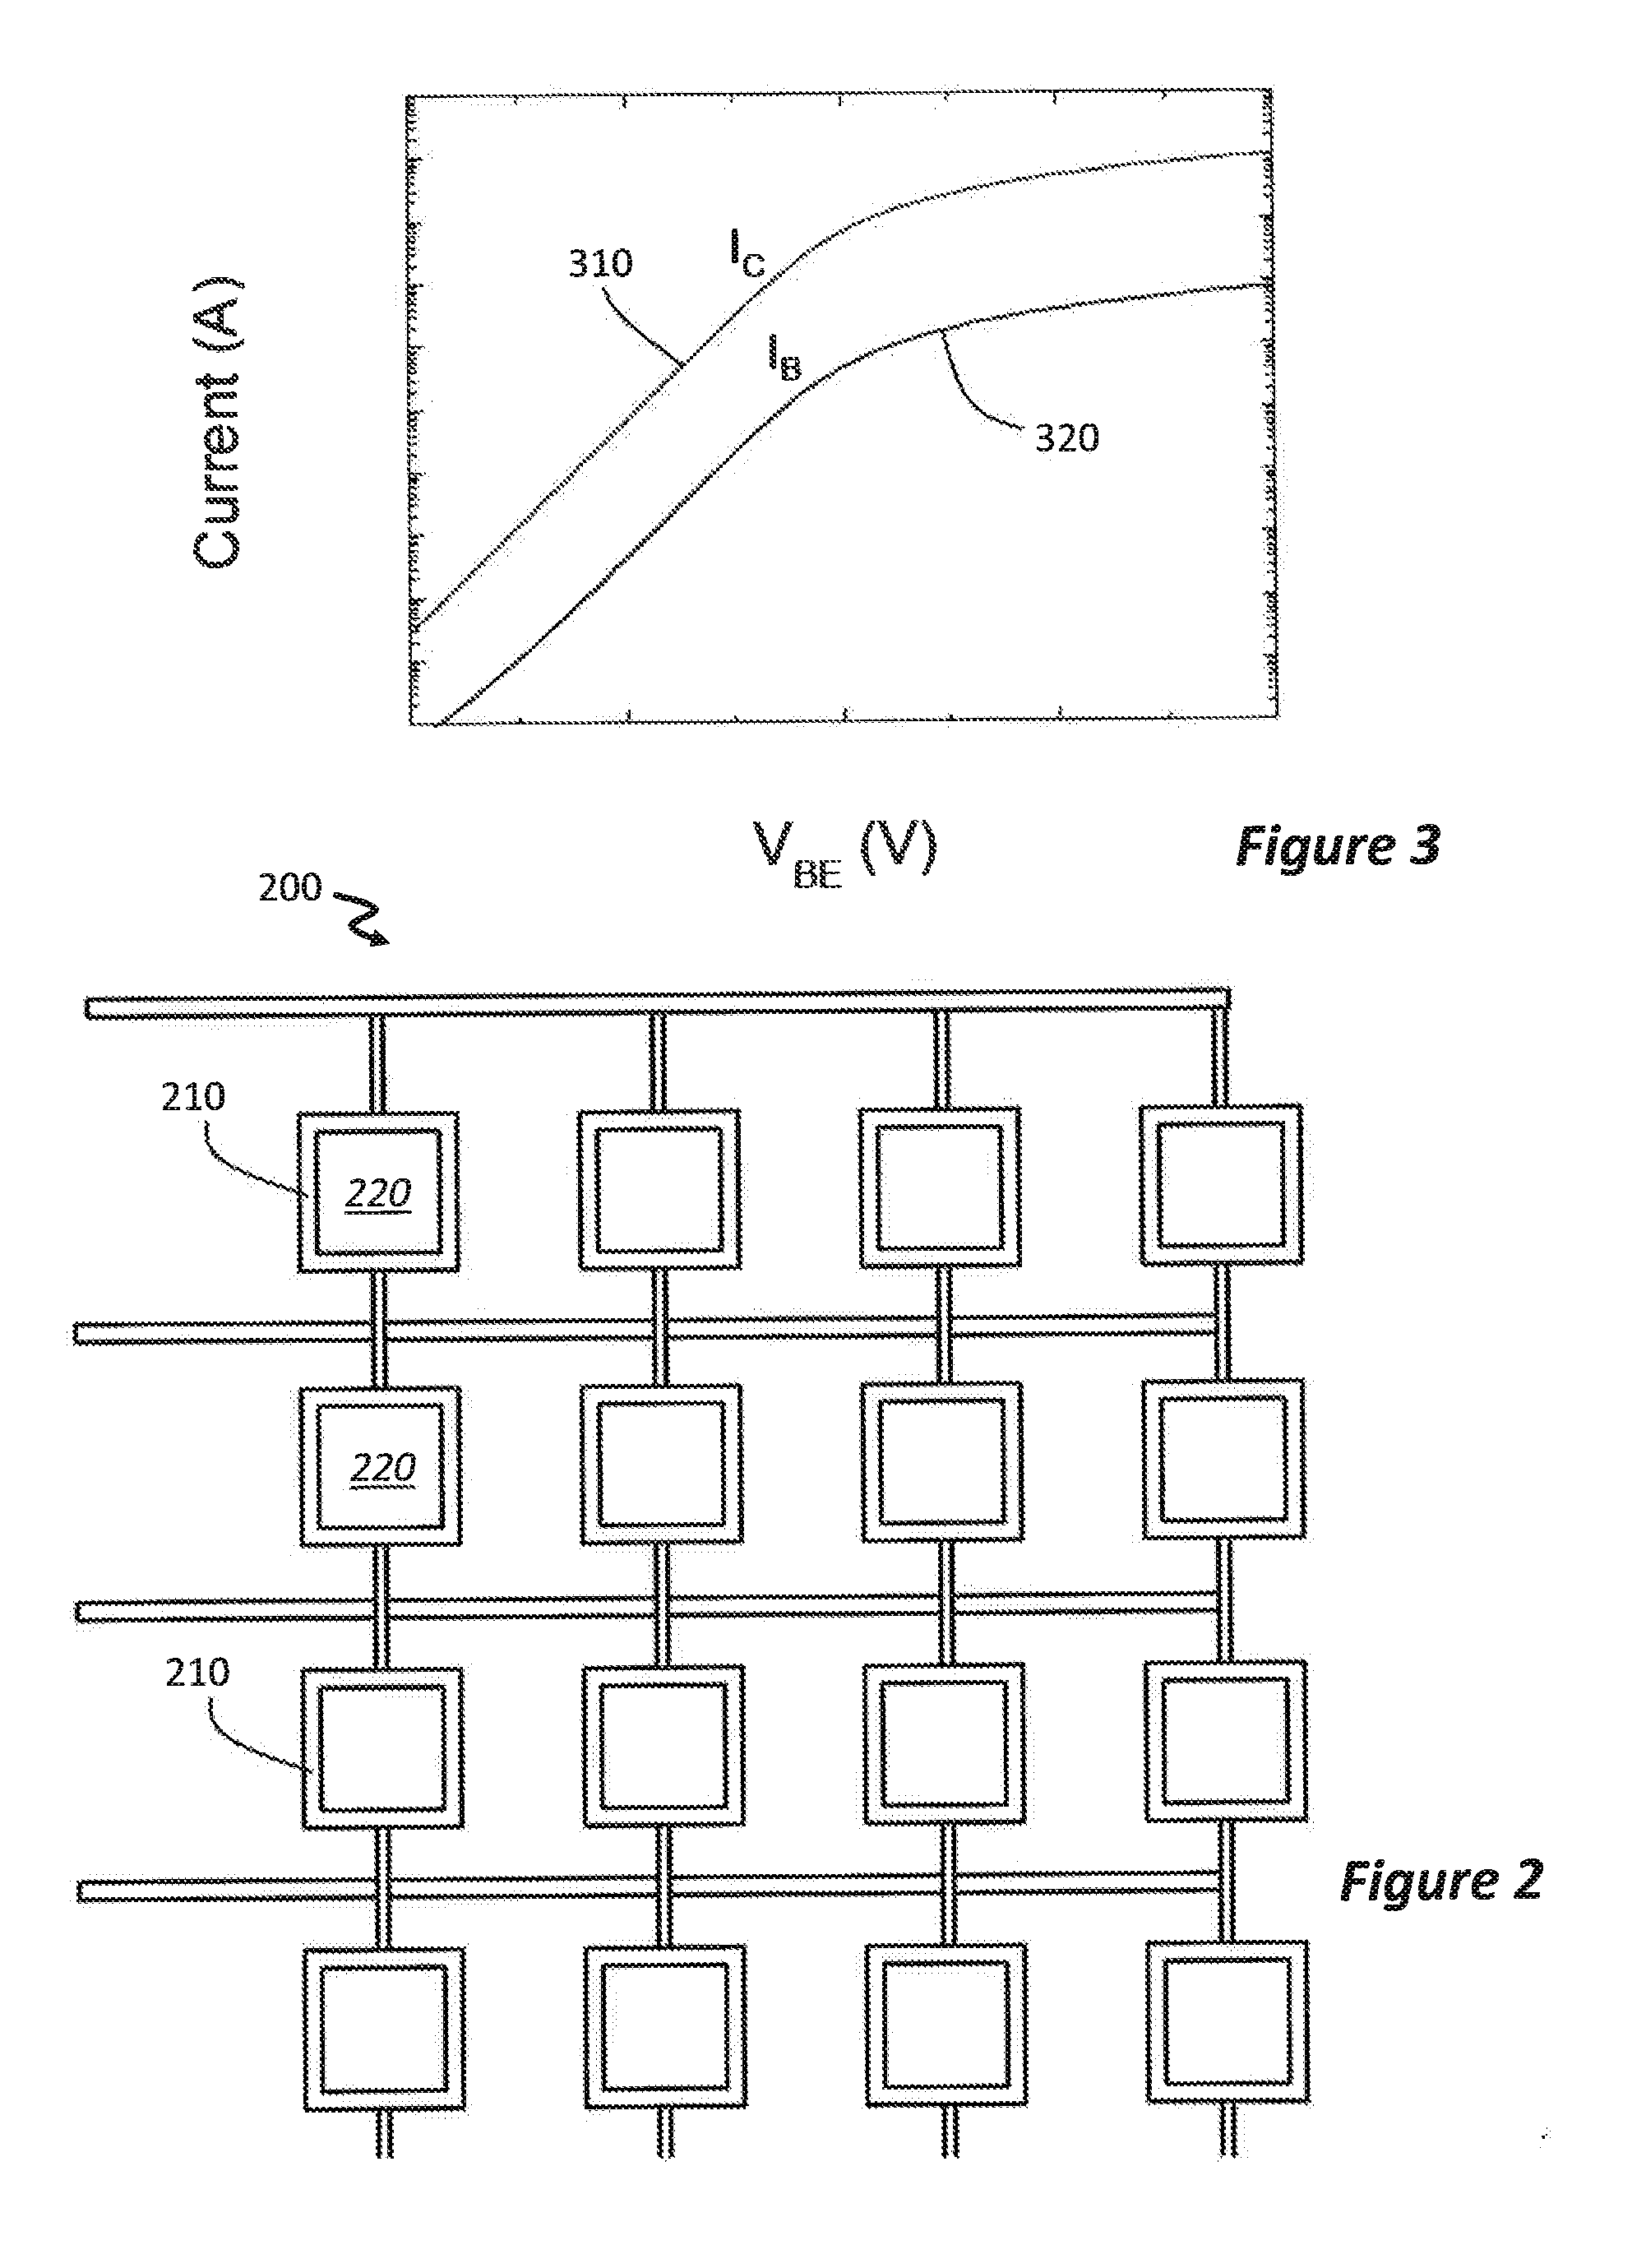 Puf method using and circuit having an array of bipolar transistors